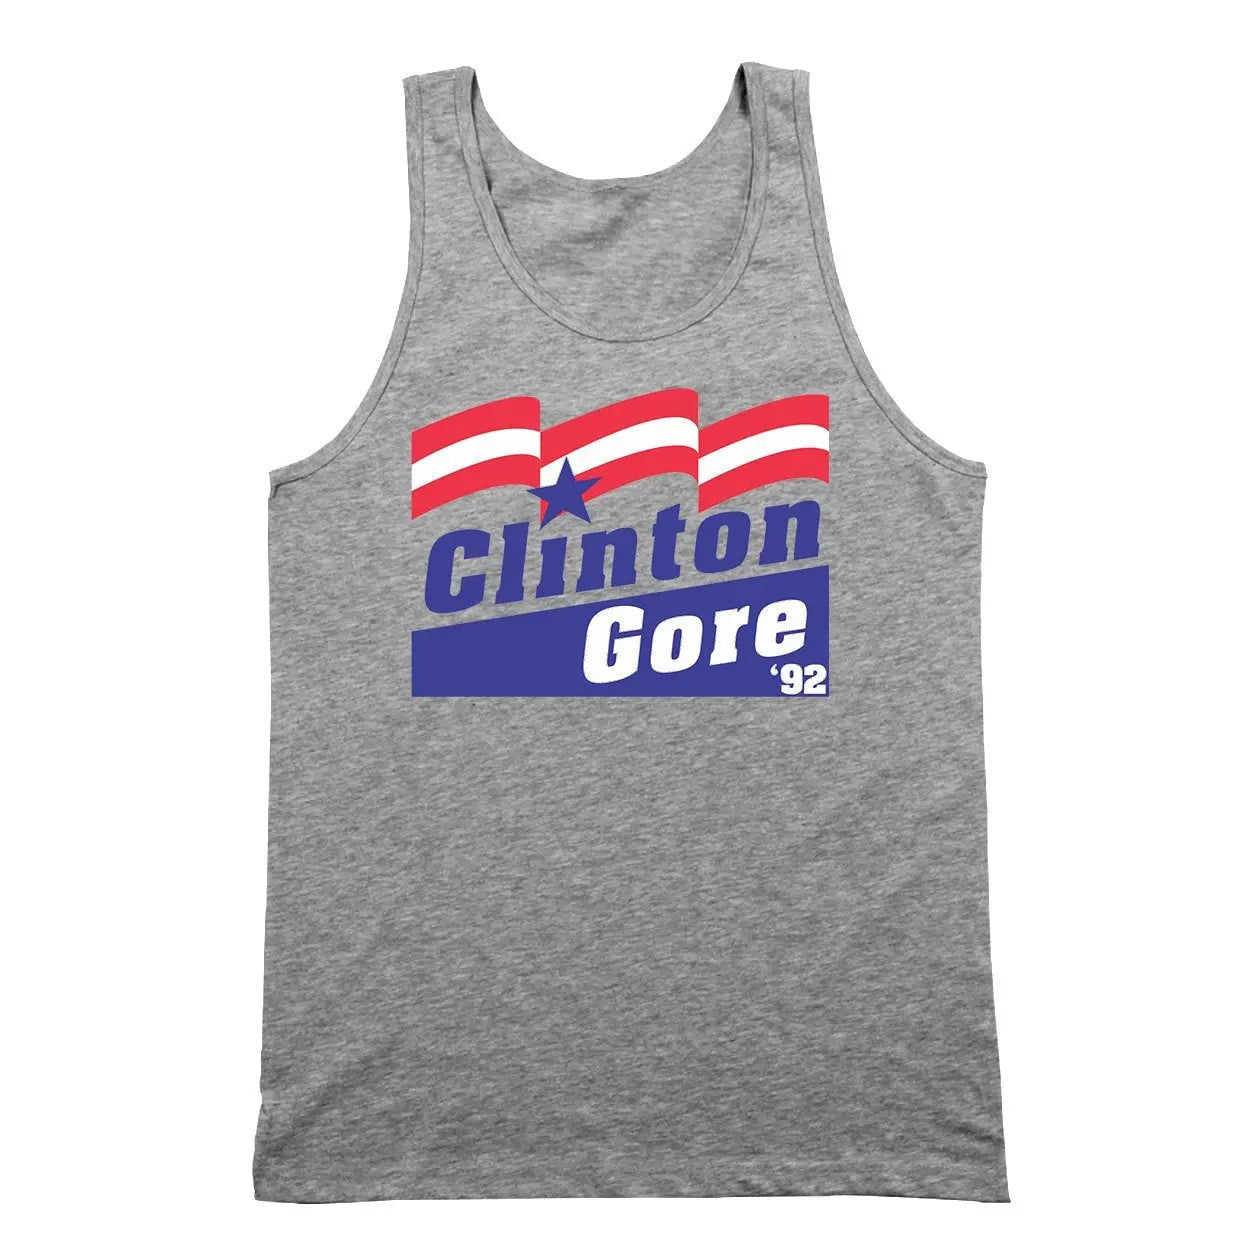 Clinton Gore 92 Election Tshirt - Donkey Tees